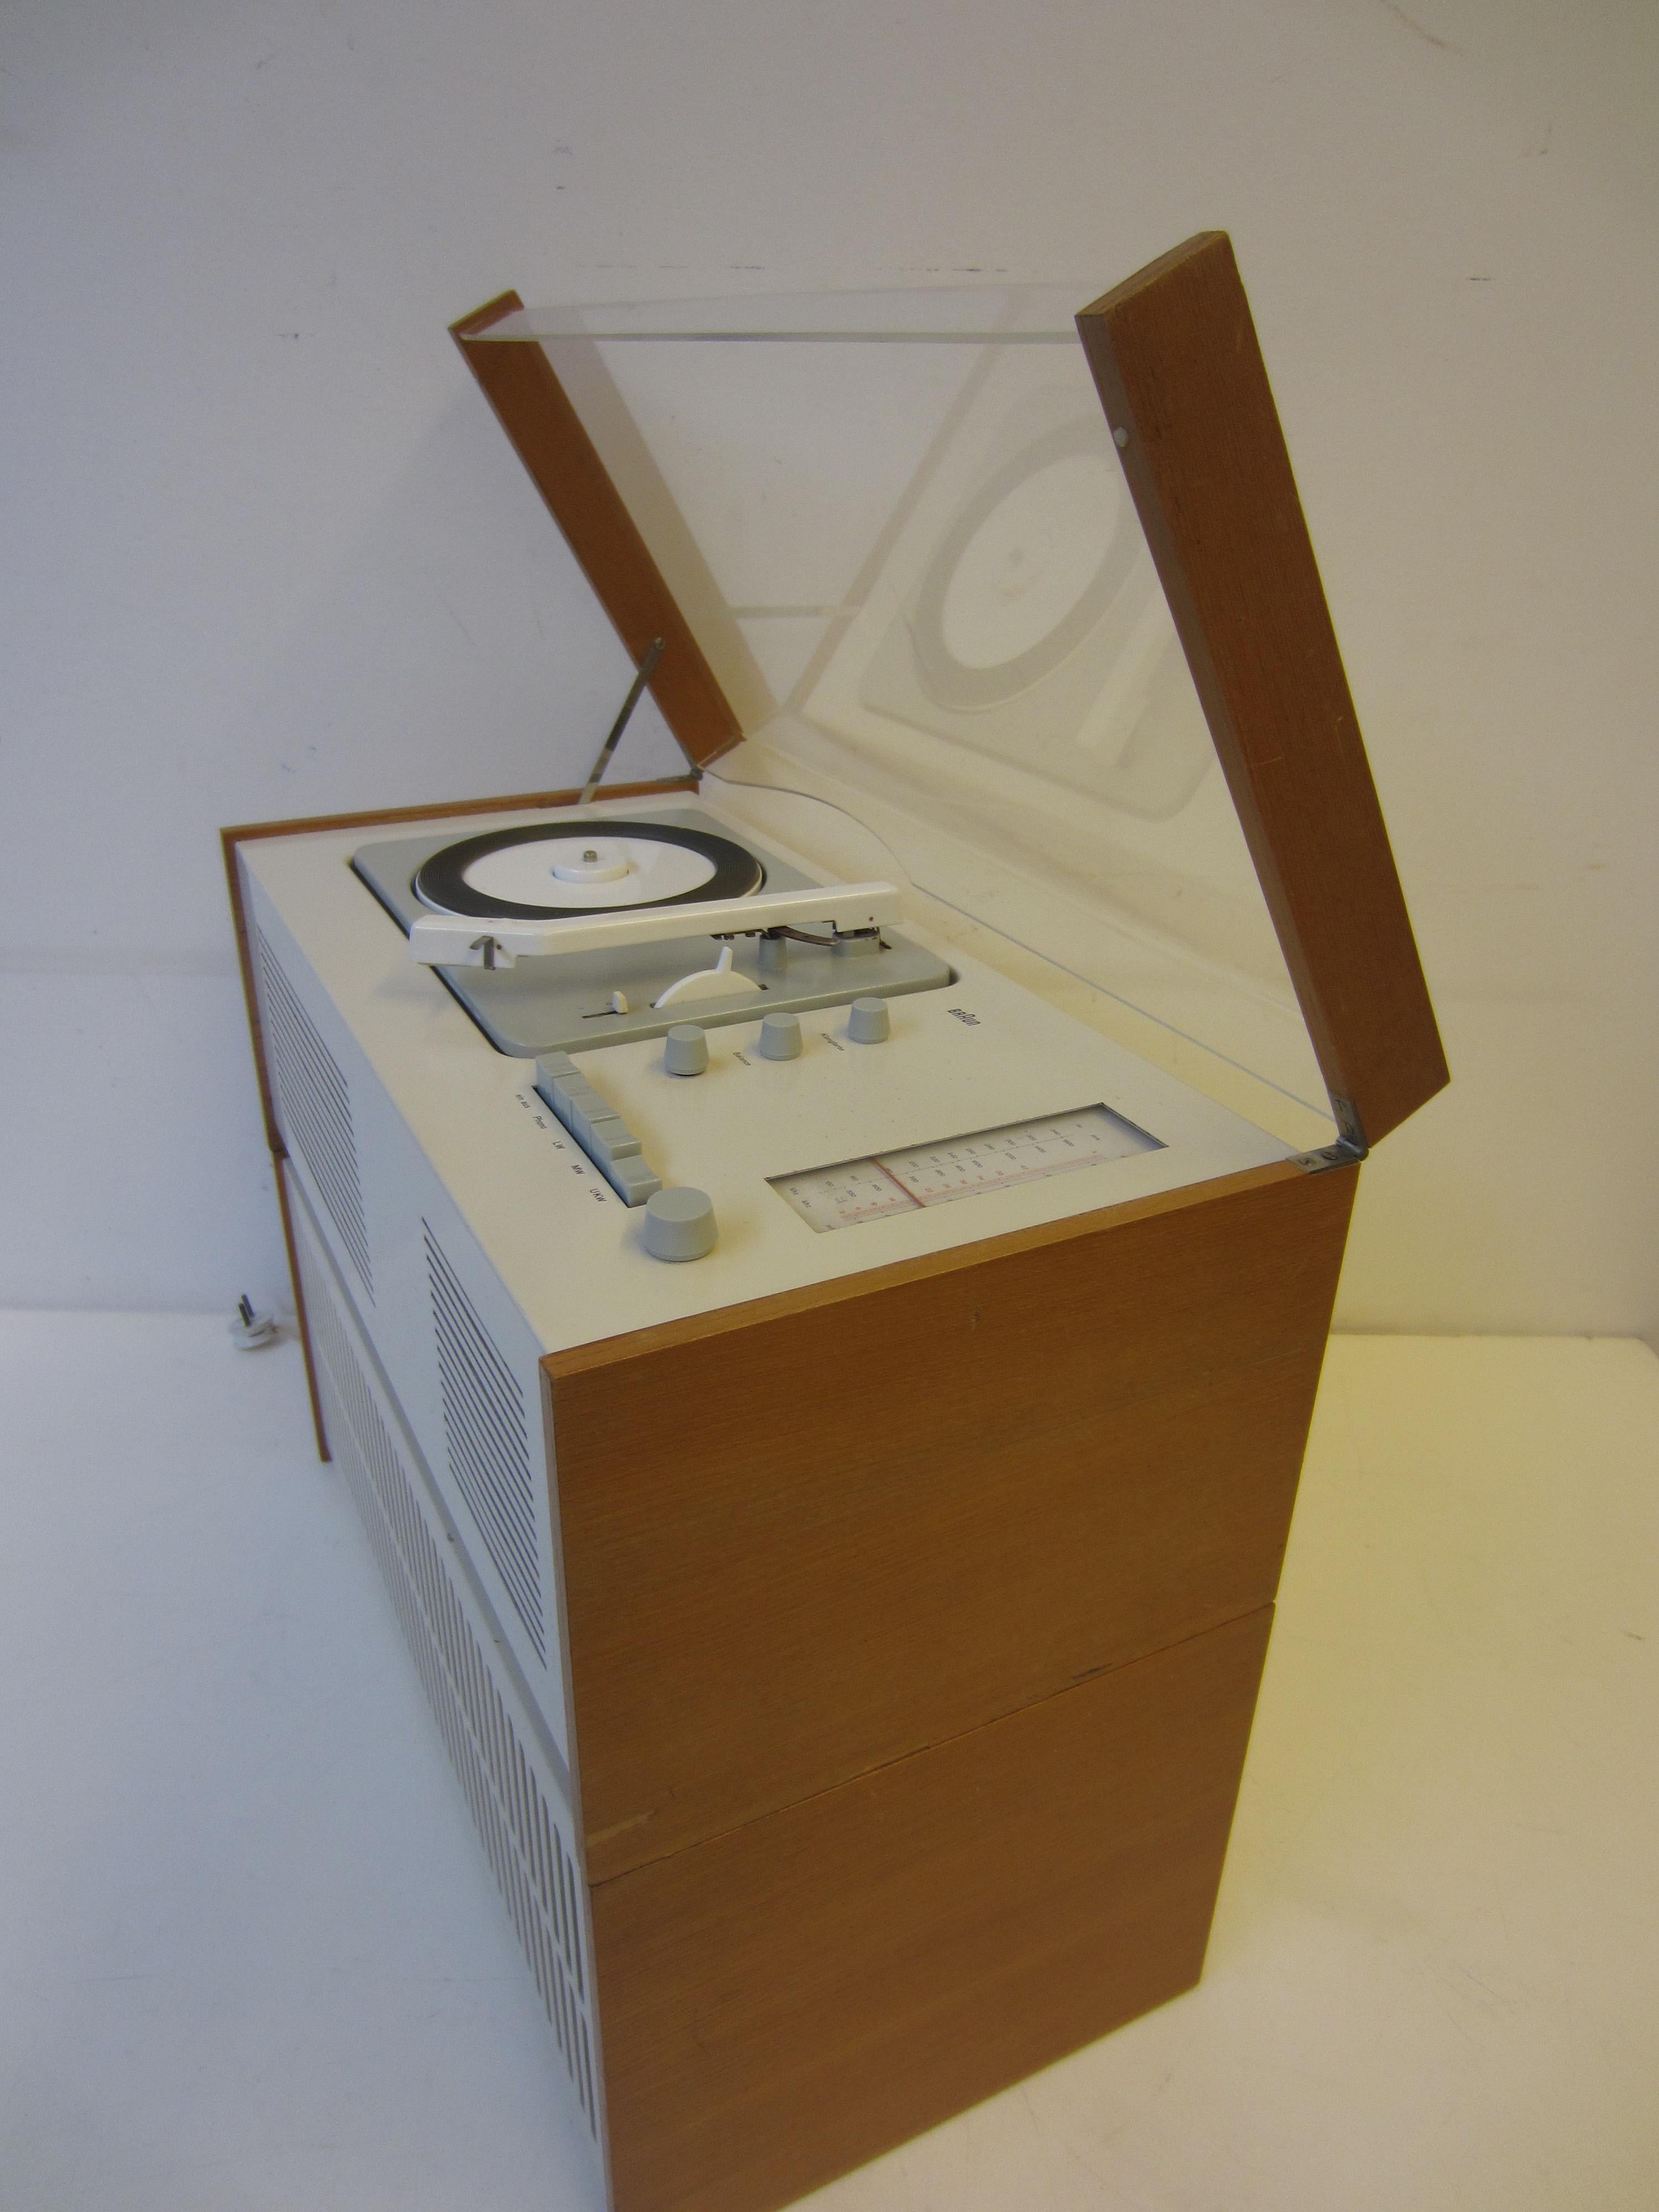 Mid-Century Modern SK61 Record Player L1 speaker, Designed by Dieter Rams for Braun, 1966